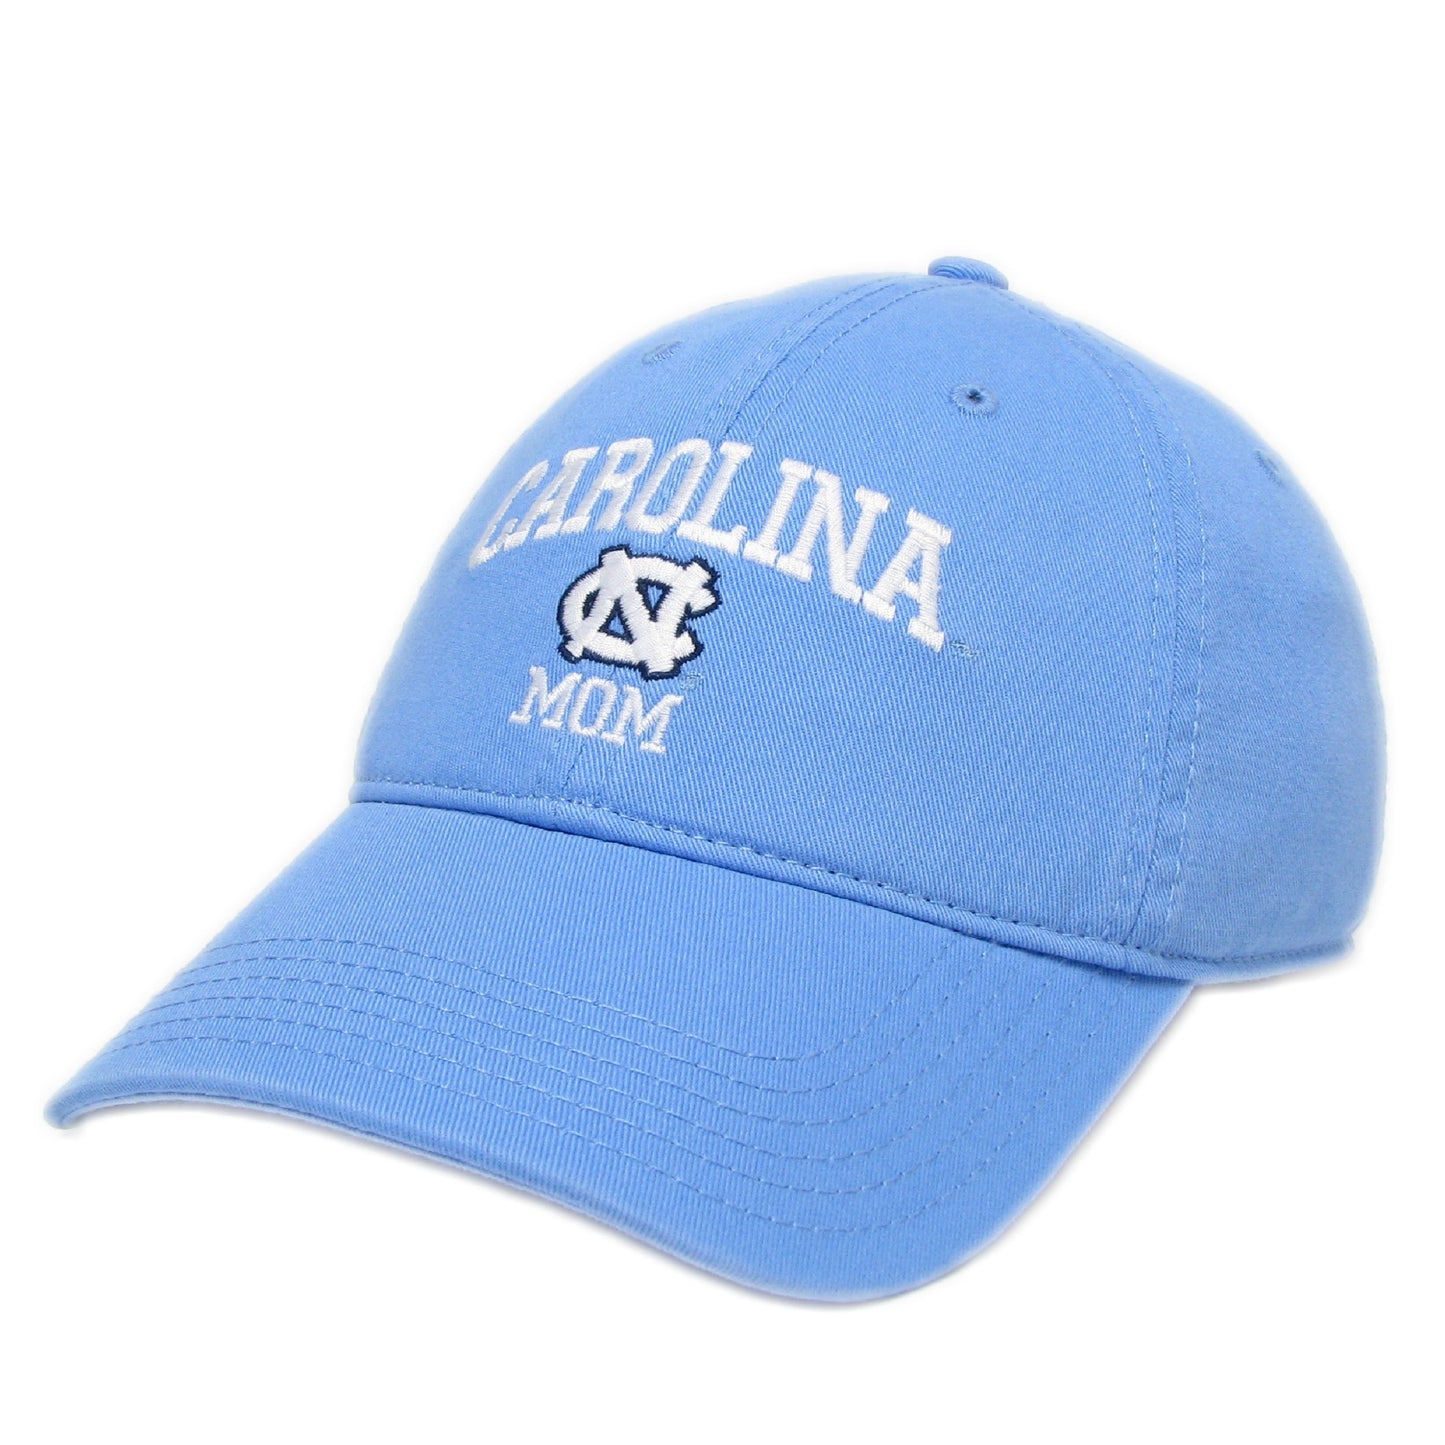 UNC Mom Hat in Carolina Blue - Adjustable